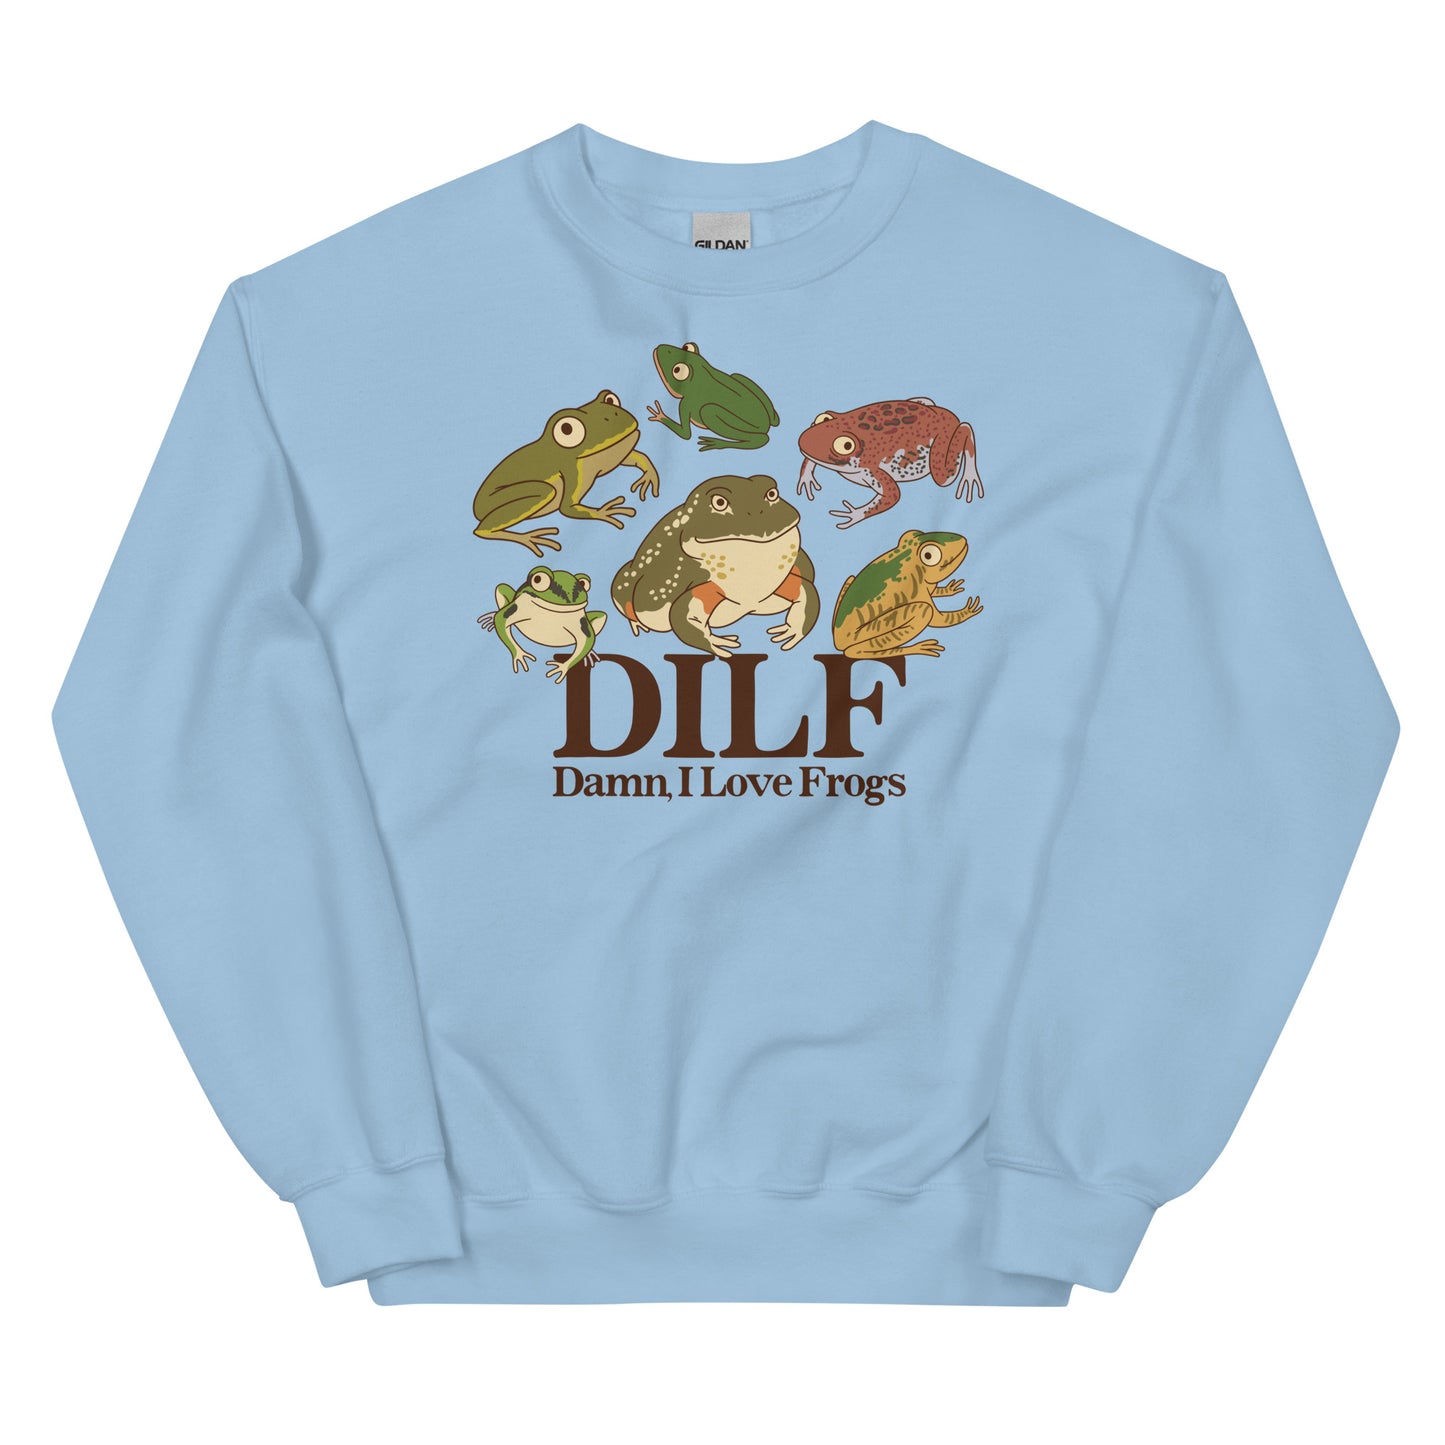 DILF (Damn, I Love Frogs) Unisex Sweatshirt